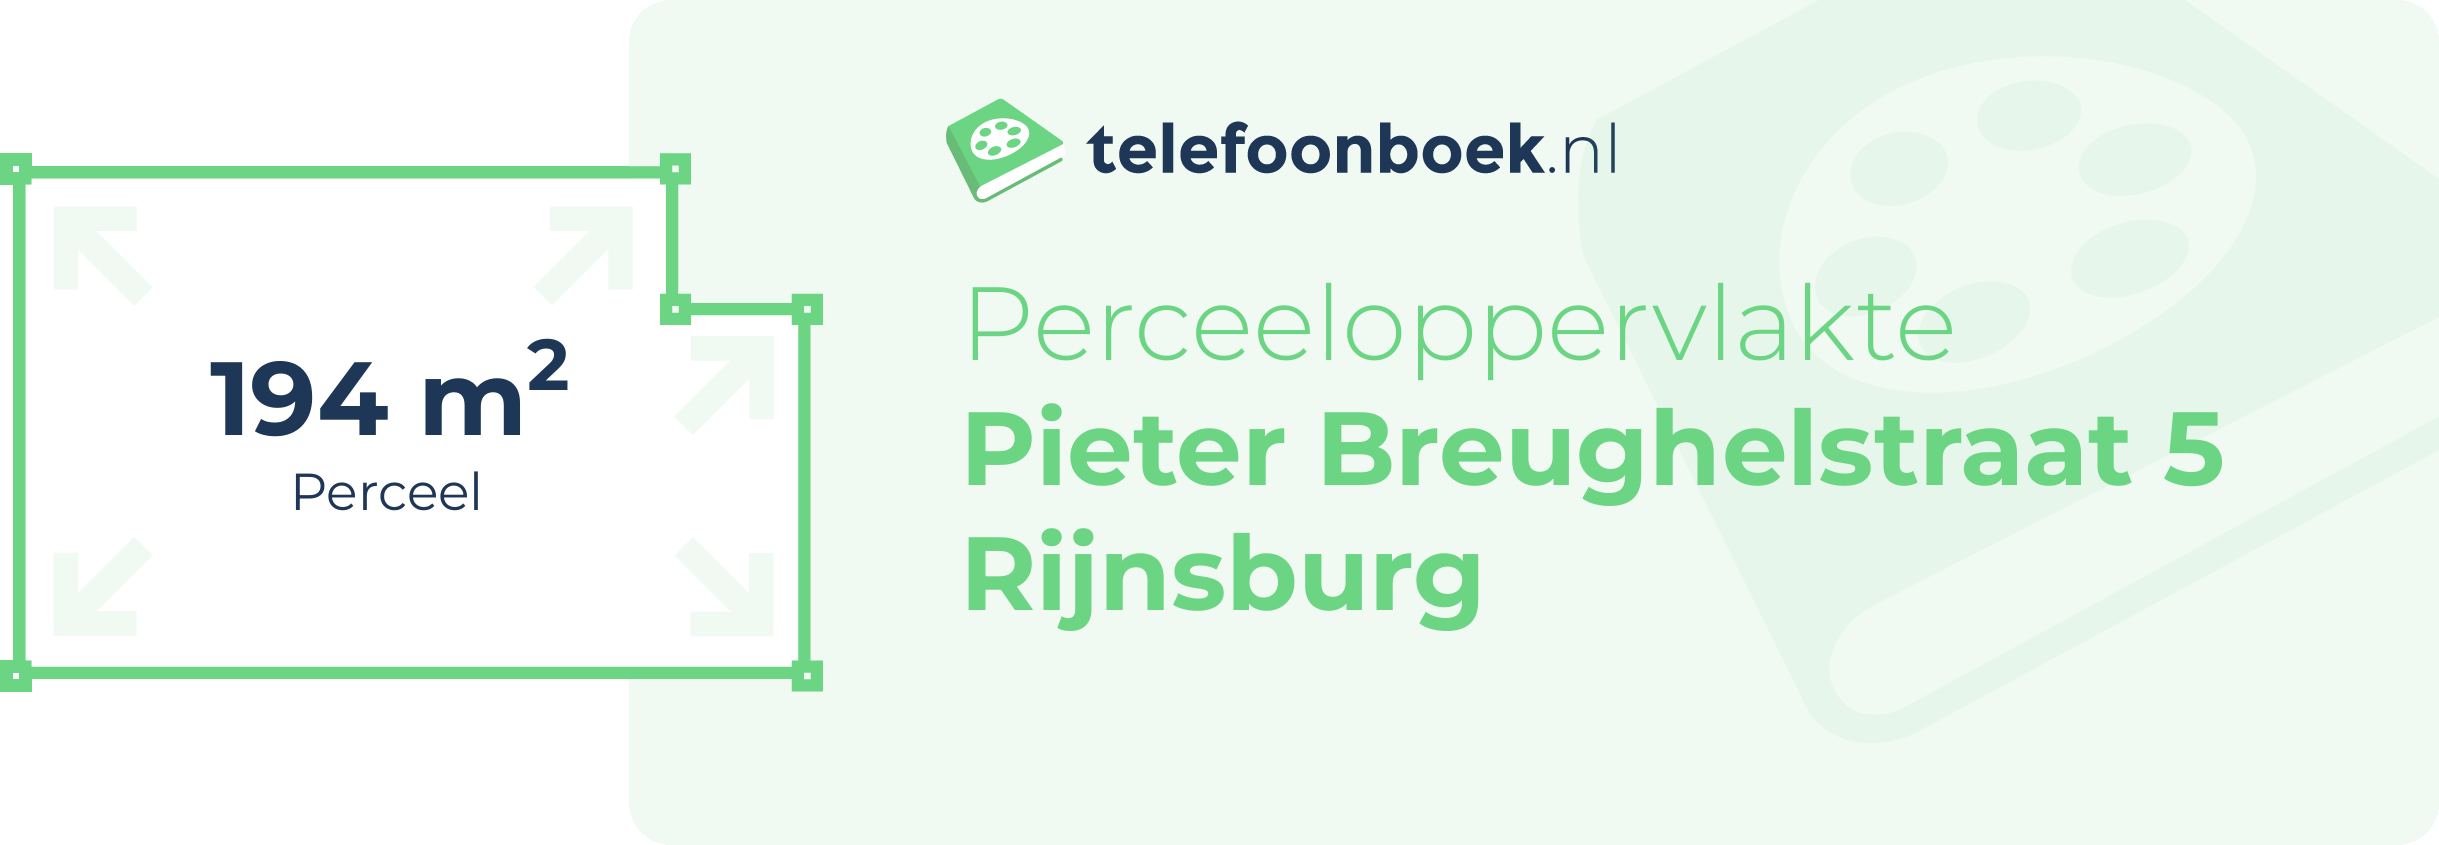 Perceeloppervlakte Pieter Breughelstraat 5 Rijnsburg